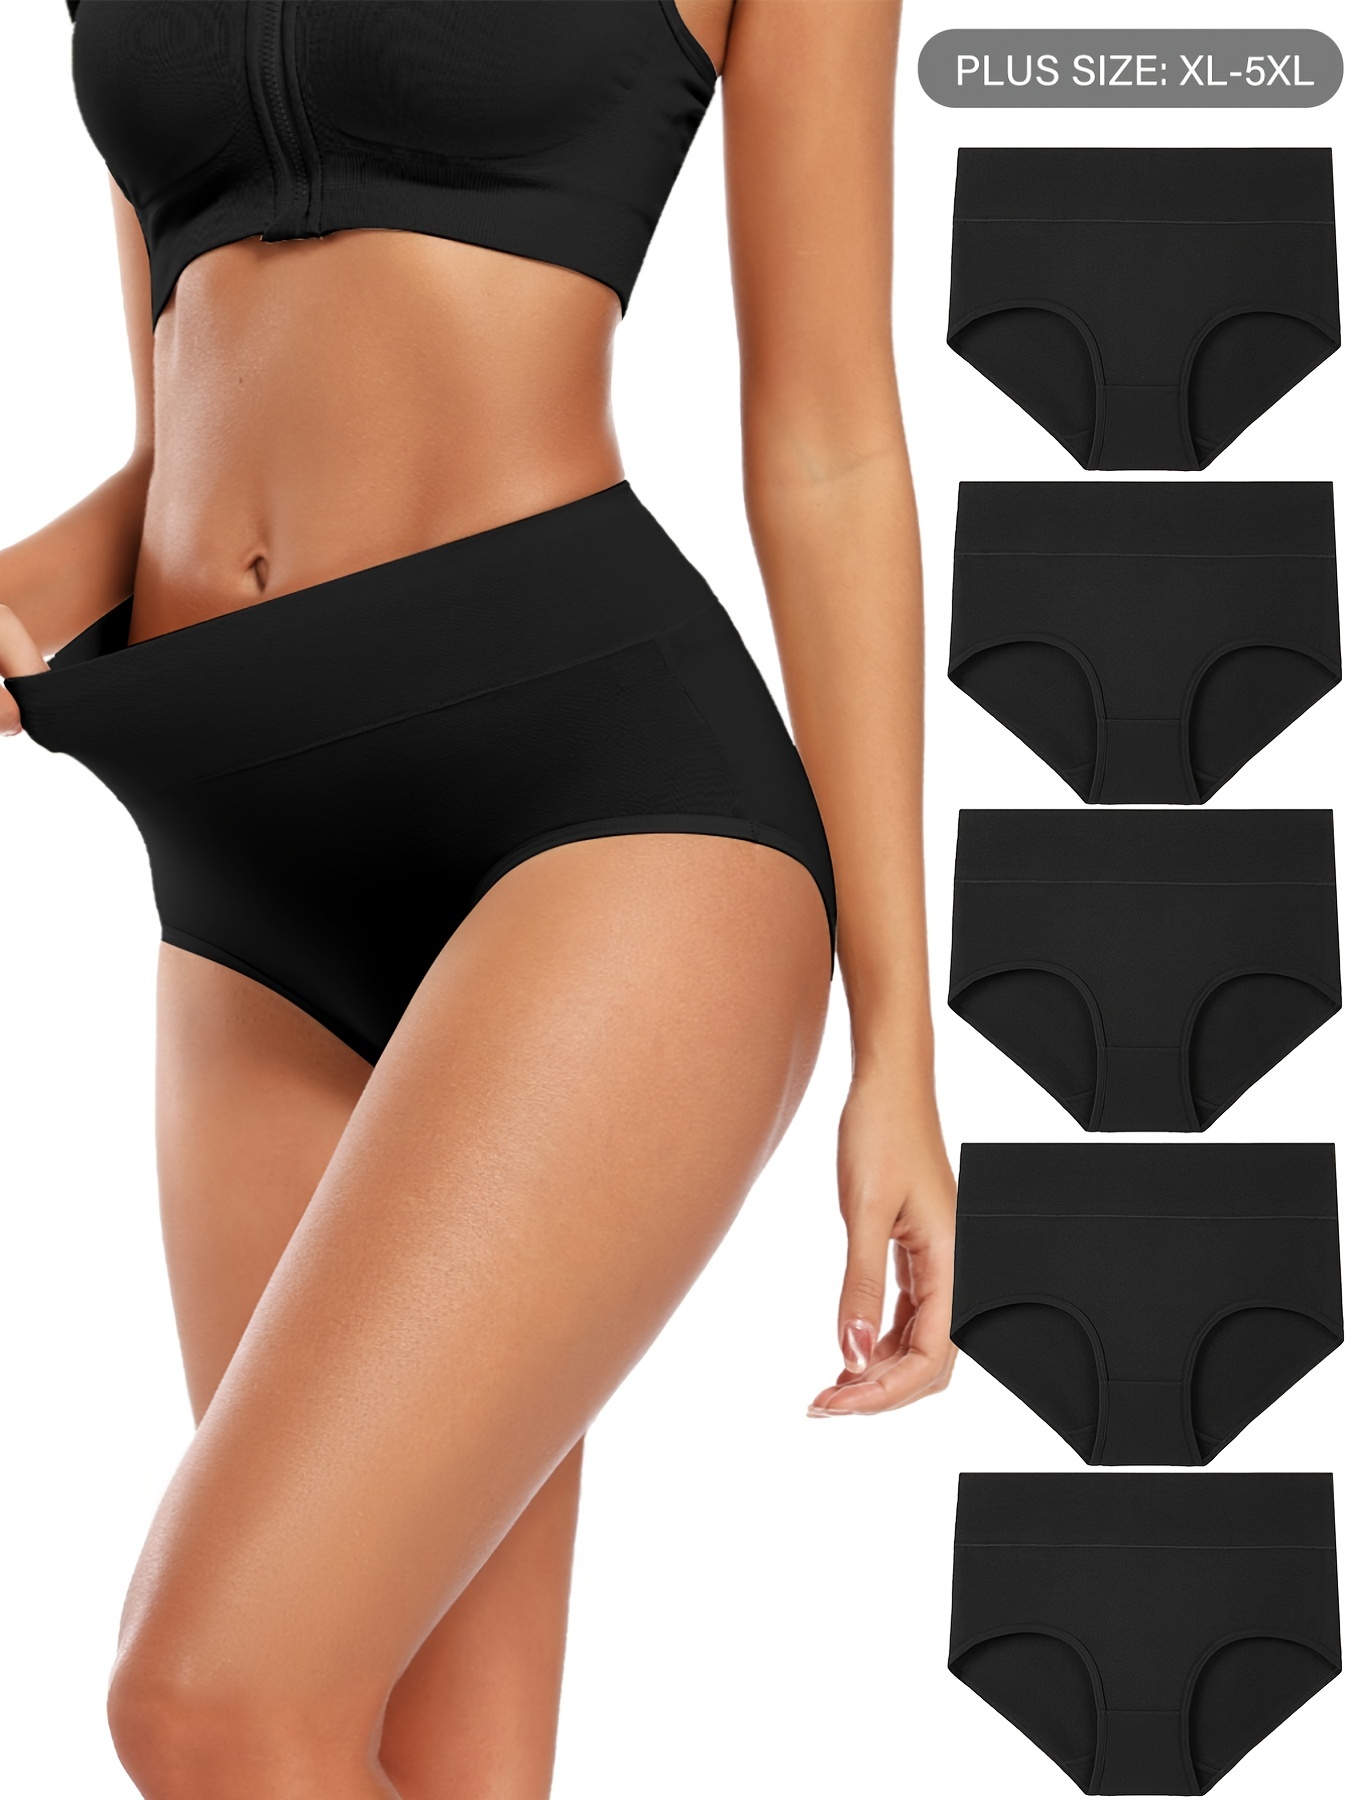 3pcs/Pack Women's Plus Size High Waist Underwear, Comfortable & Soft